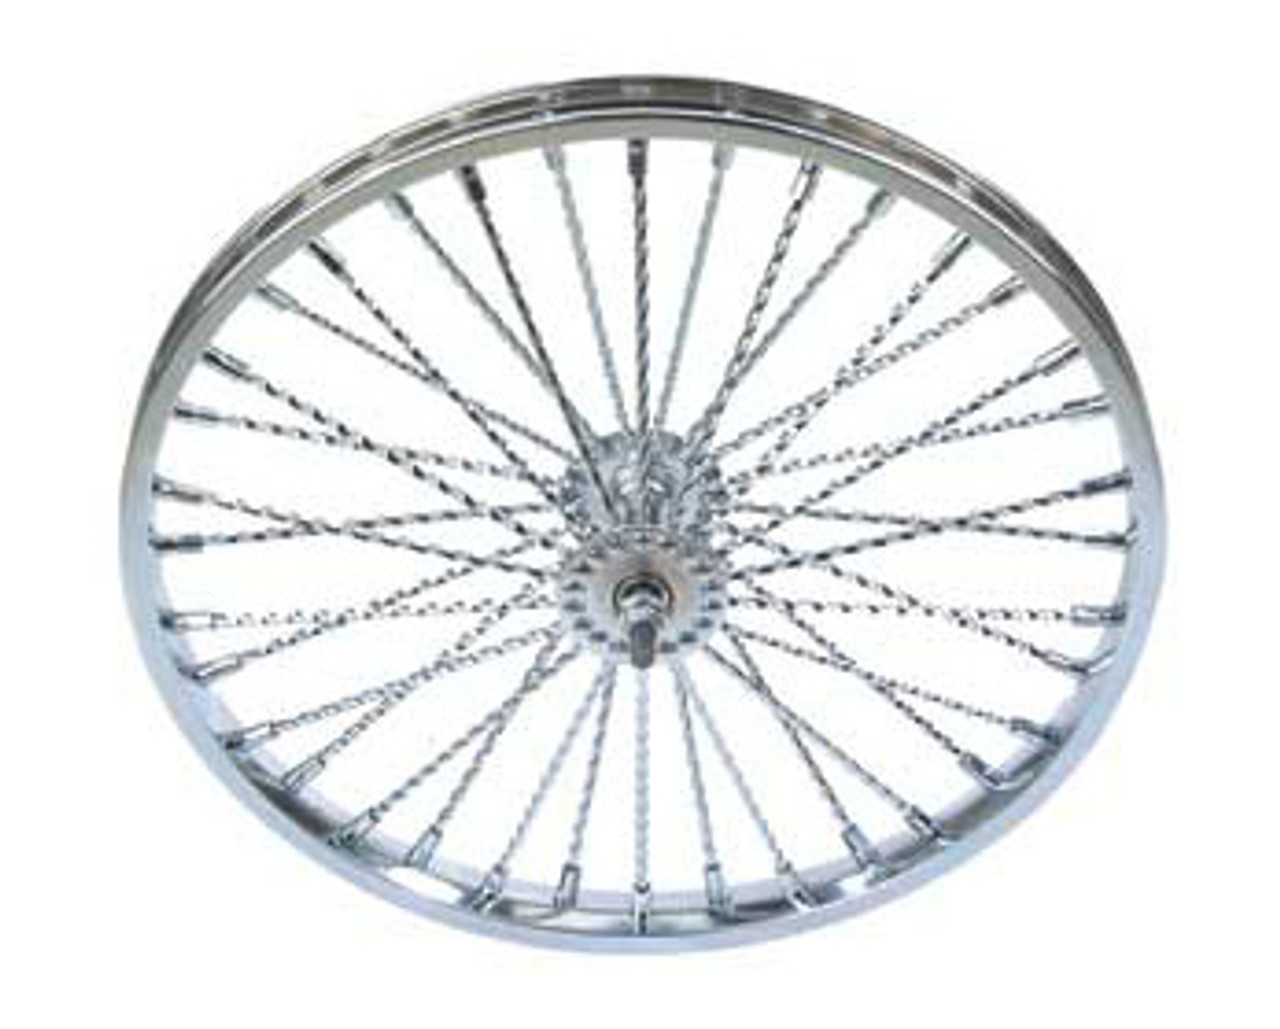 lowrider bike wheels